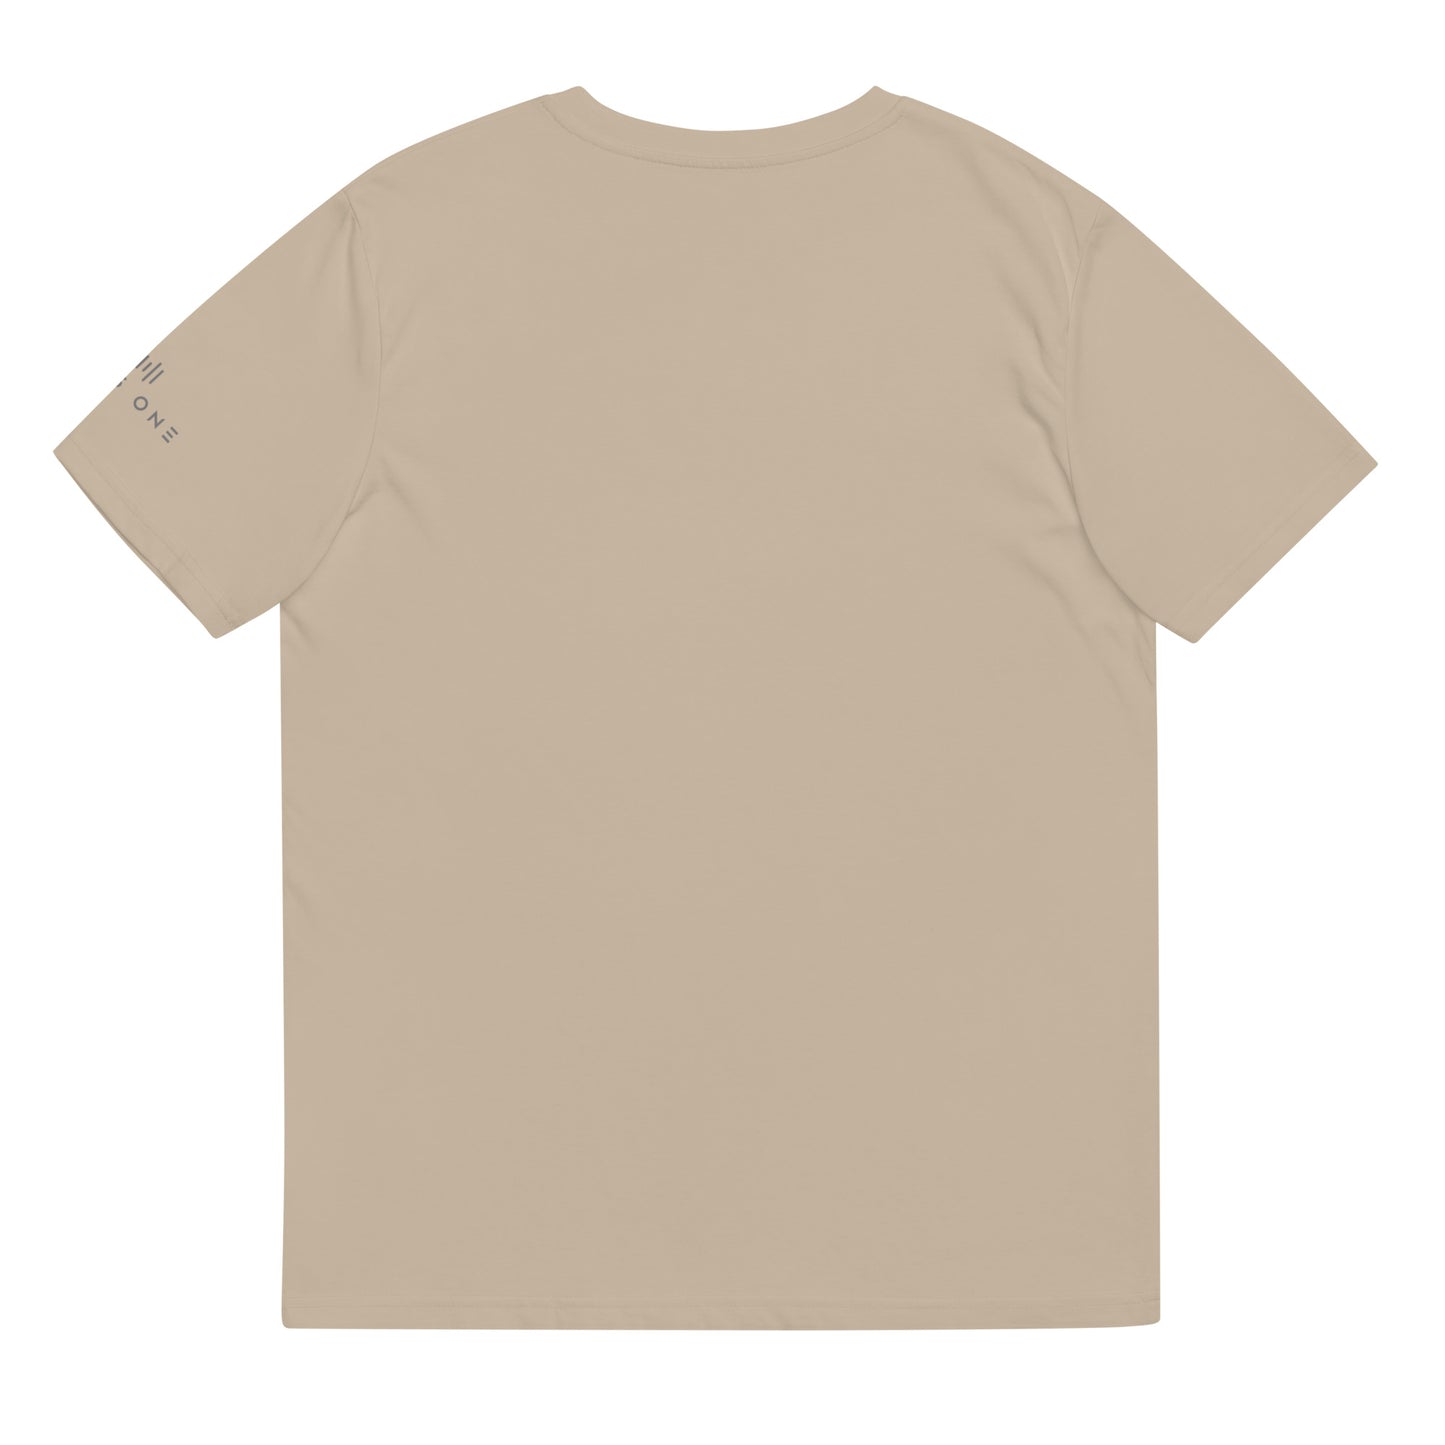 Tribe SPLAT (v1) Unisex organic cotton t-shirt